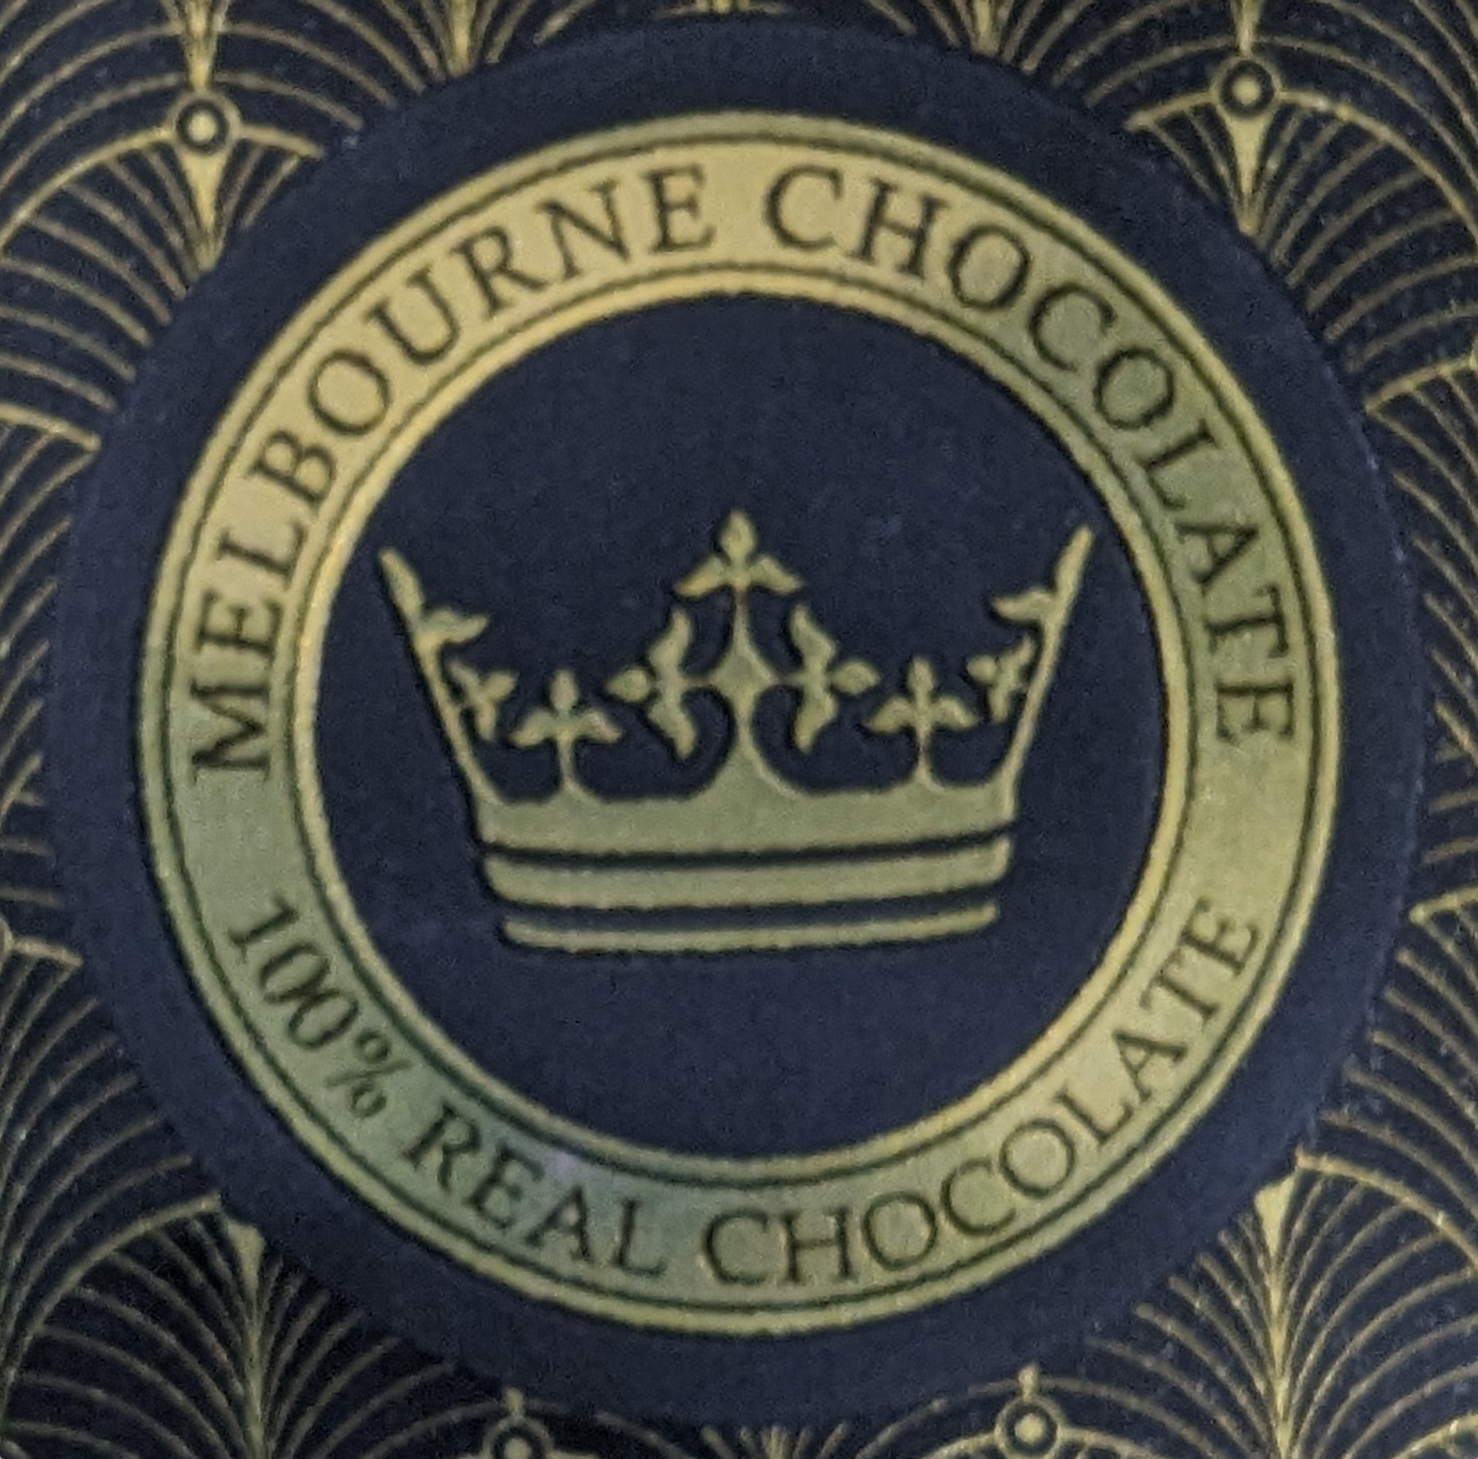 Melbourne Chocolates